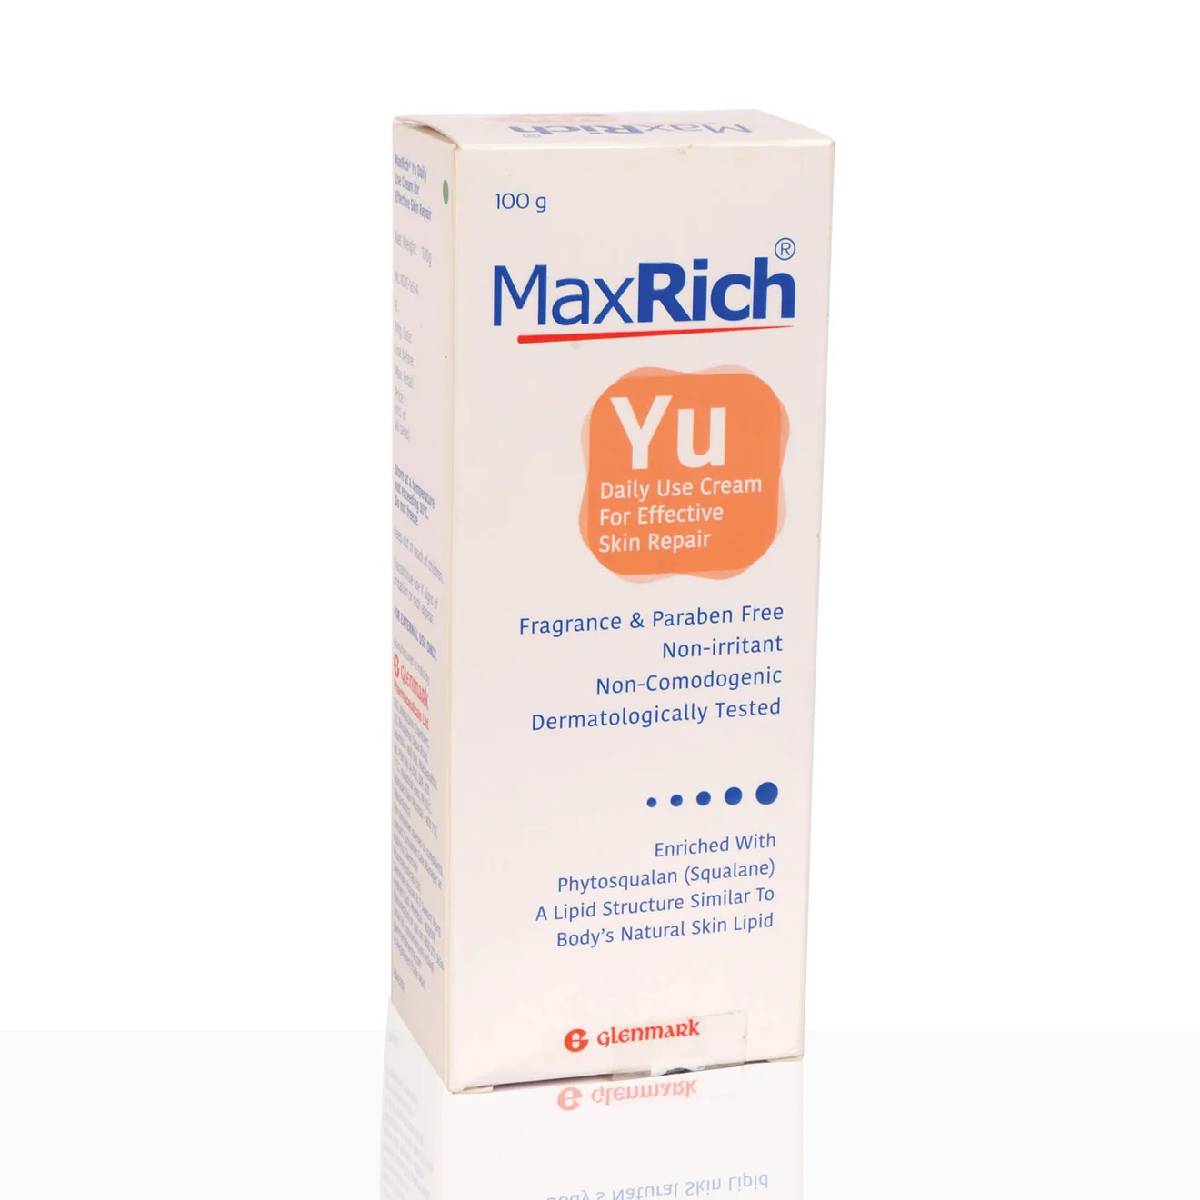 MaxRich YU Daily Use Cream For Effective Skin Repair